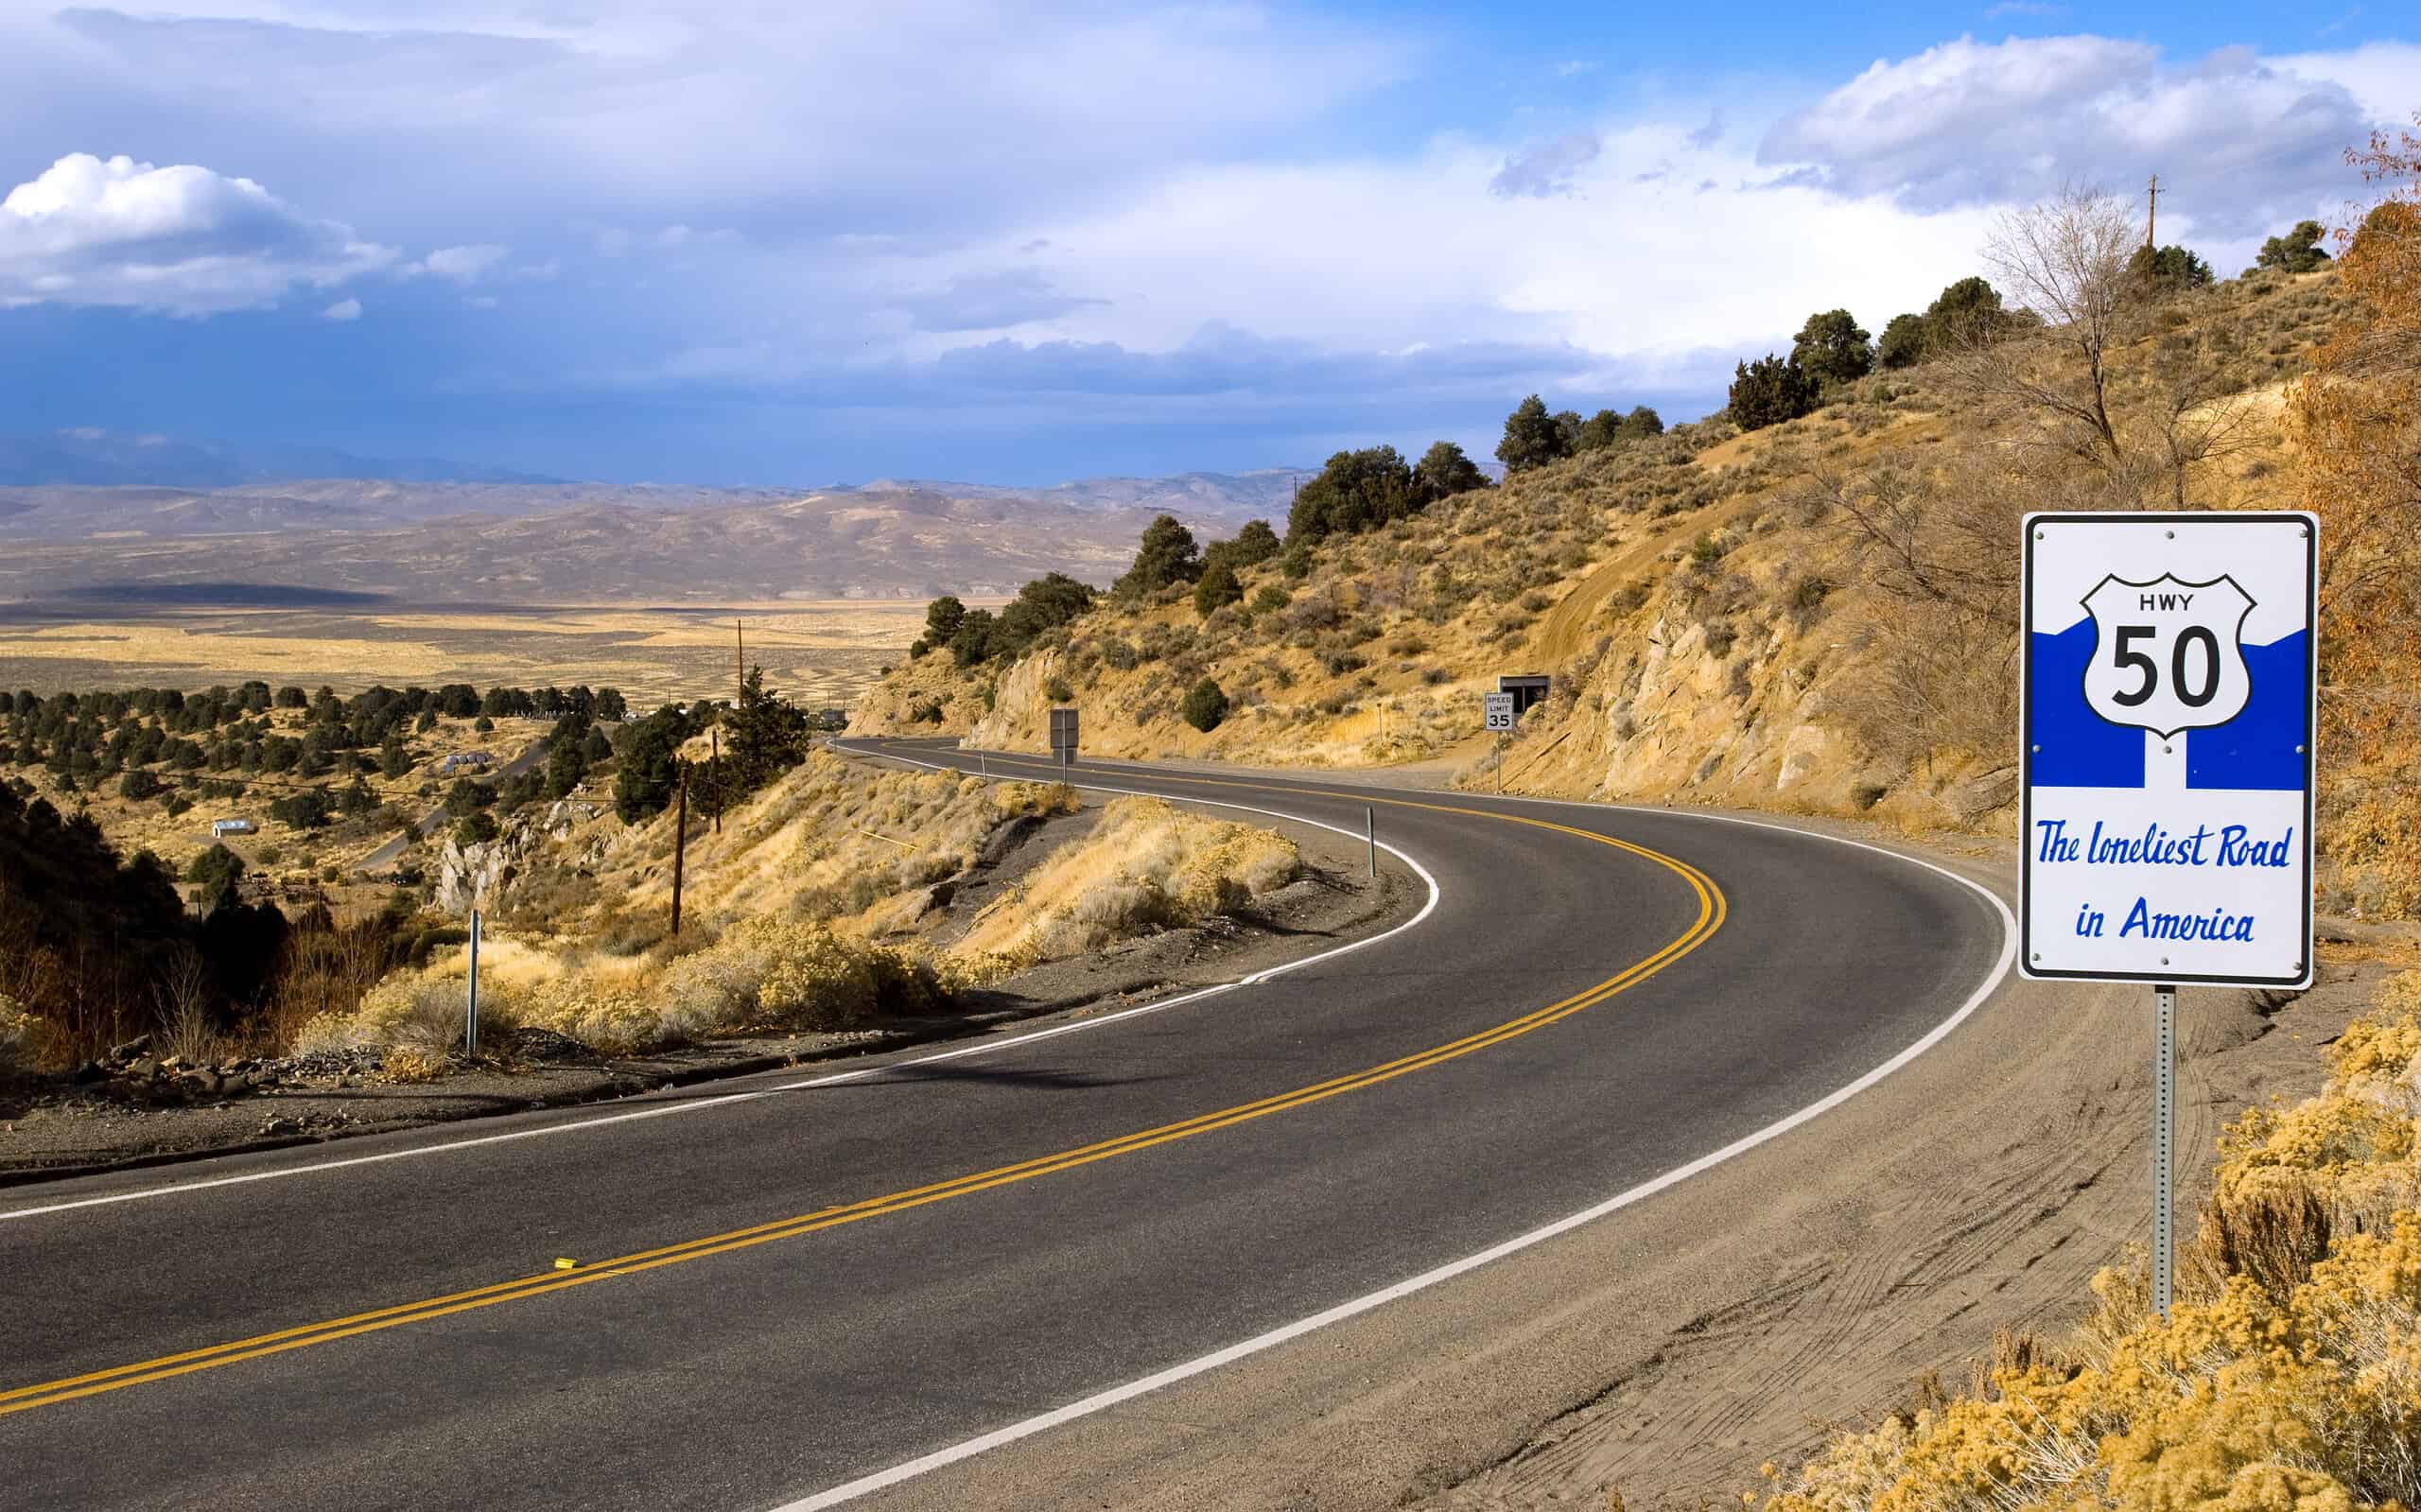 Nevada highway 50